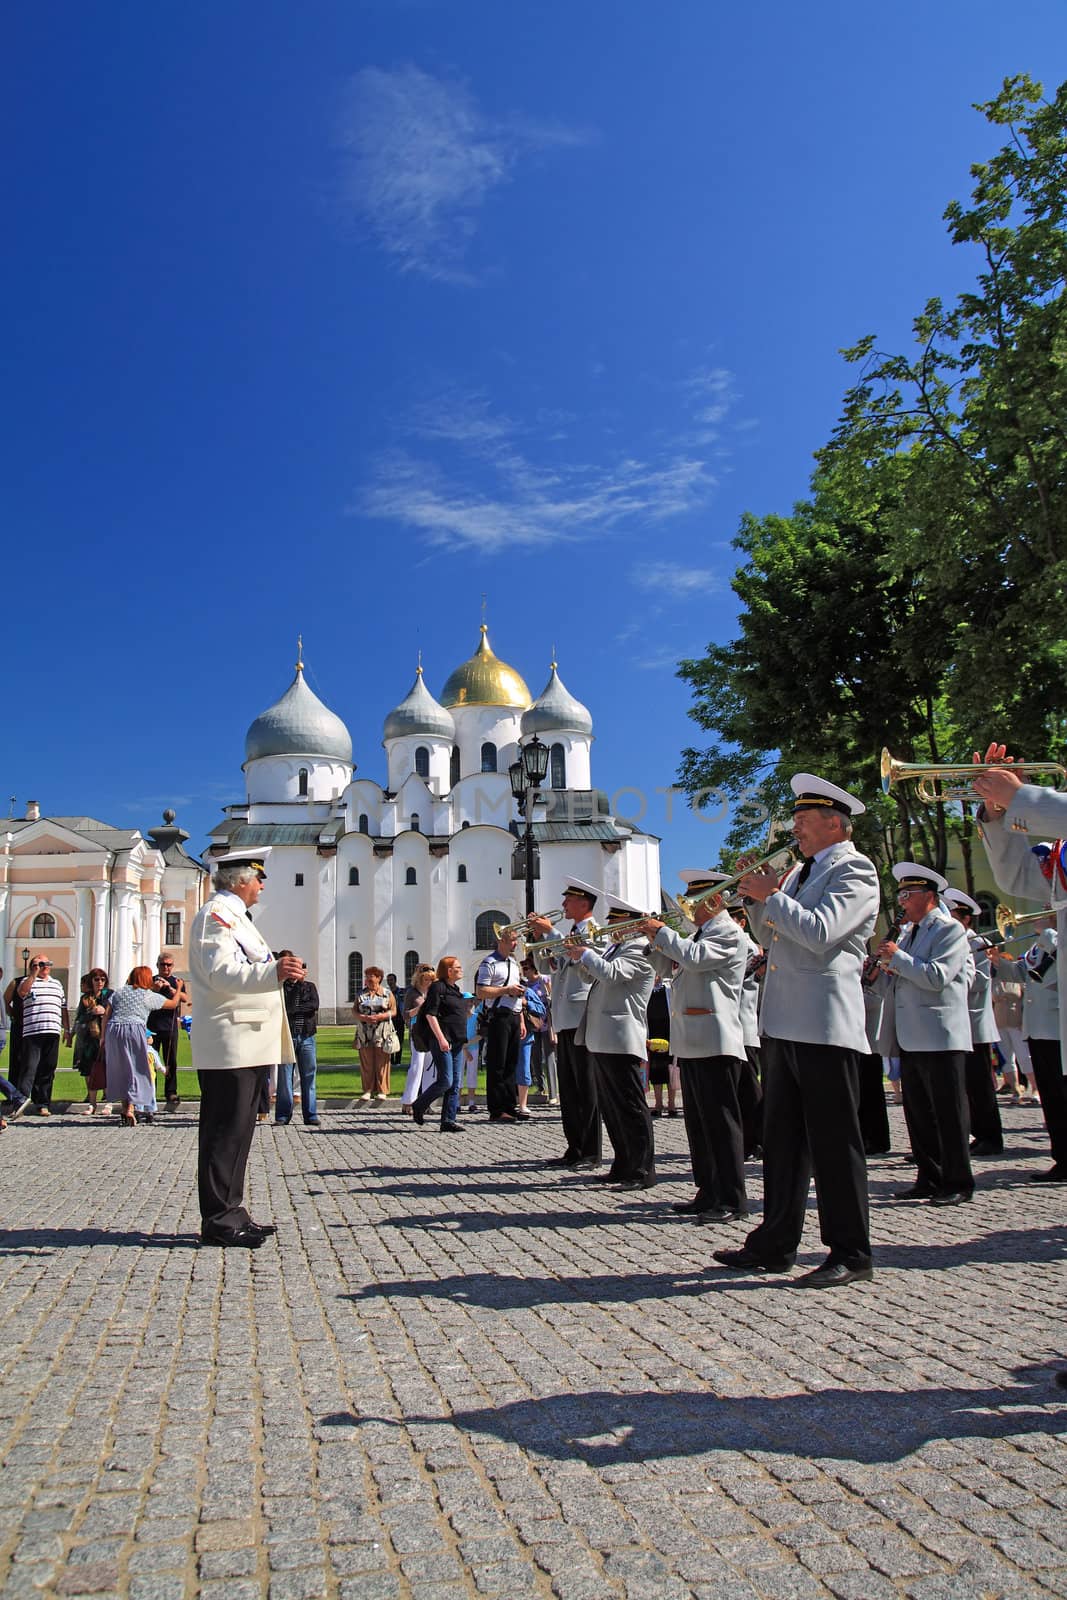 VELIKIJ NOVGOROD, RUSSIA - JUNE 10: military orchestra on street at day Veliky Novgorod, Russia at June 10, 2012